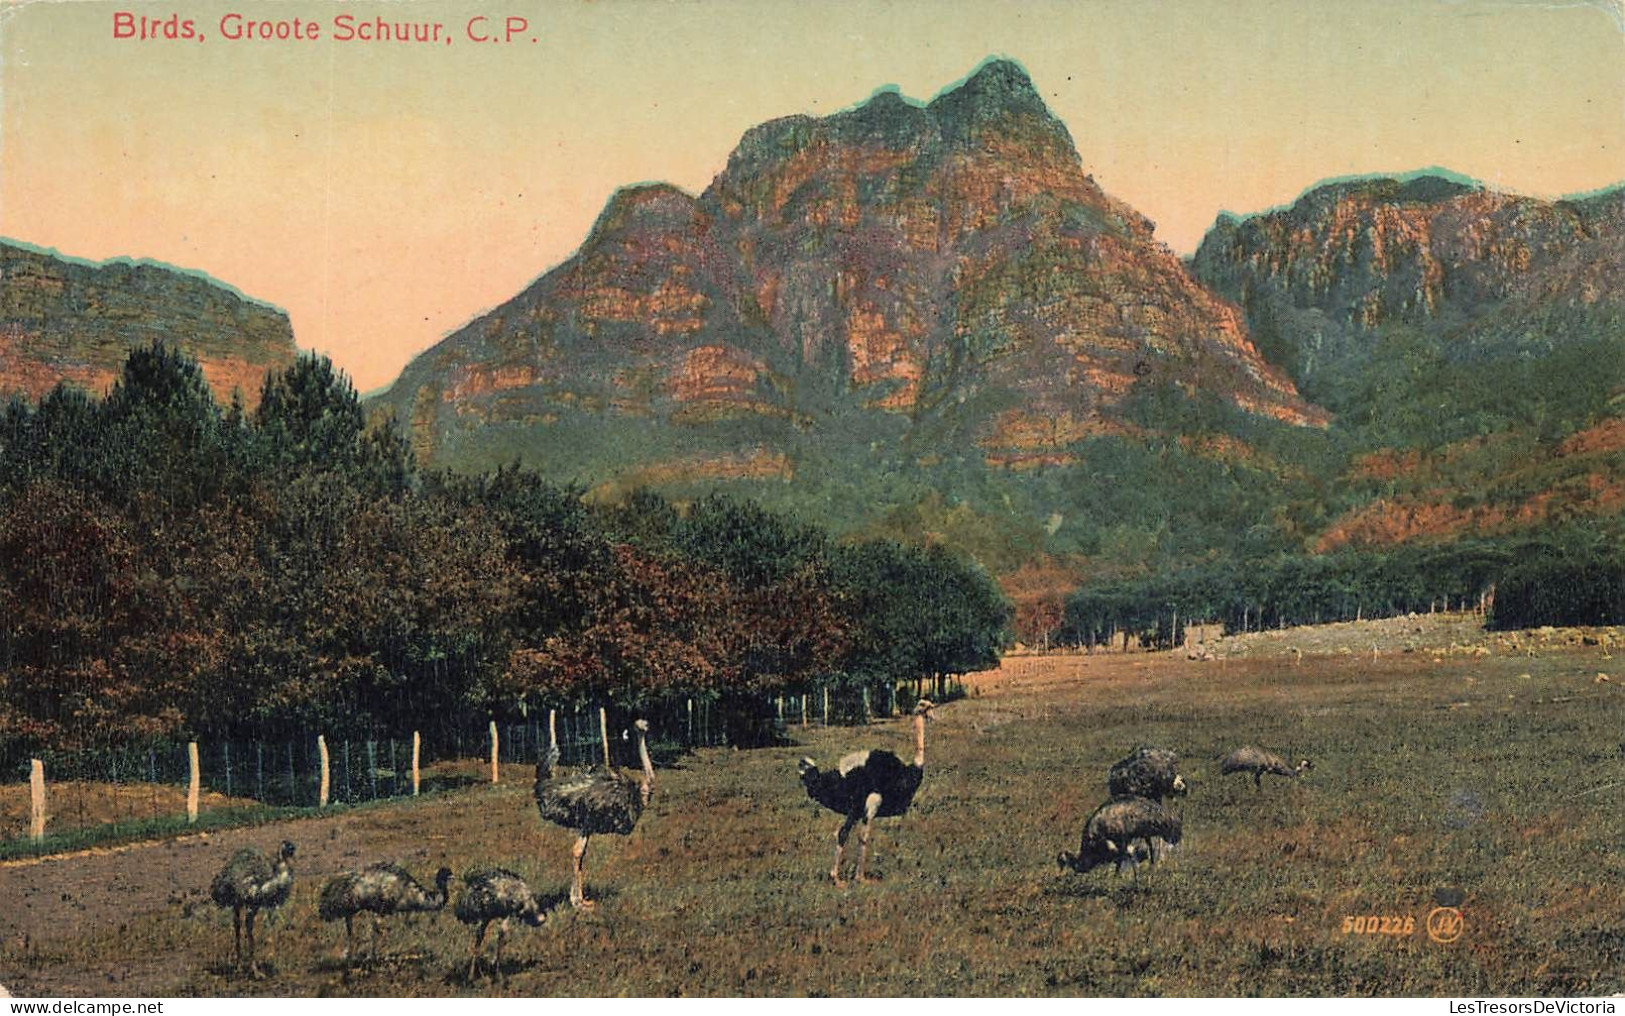 AFRIQUE DU SUD - Groote Schuur - Birds - Carte Postale Ancienne - South Africa